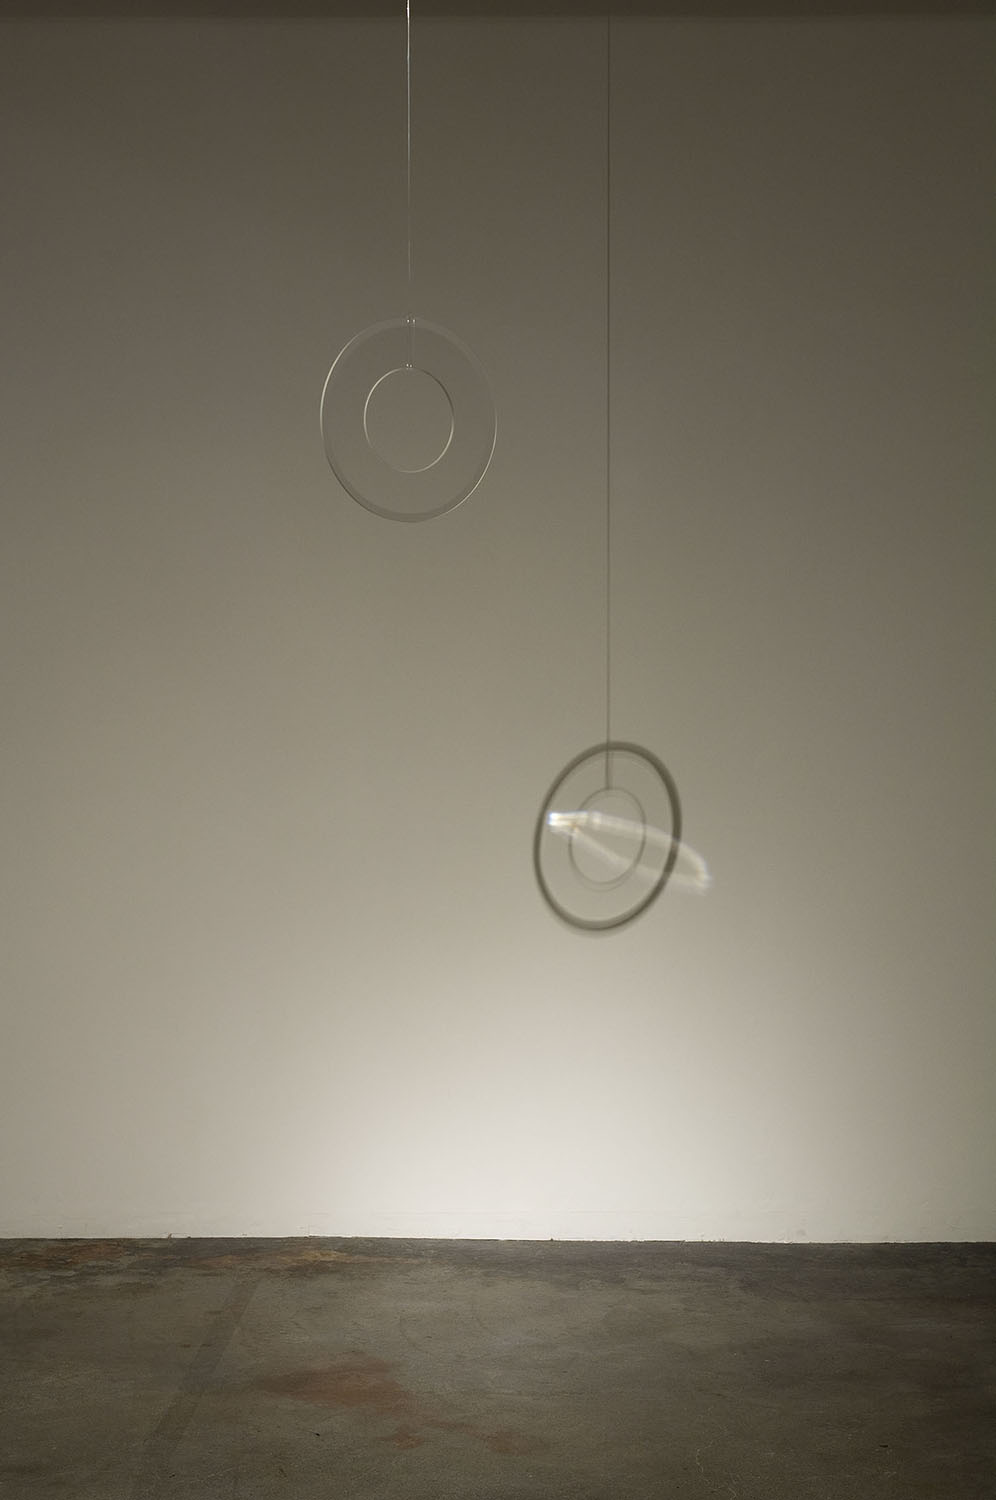 untitled 2009 #3｜24 cm diameter x 5 mm, glass｜2009